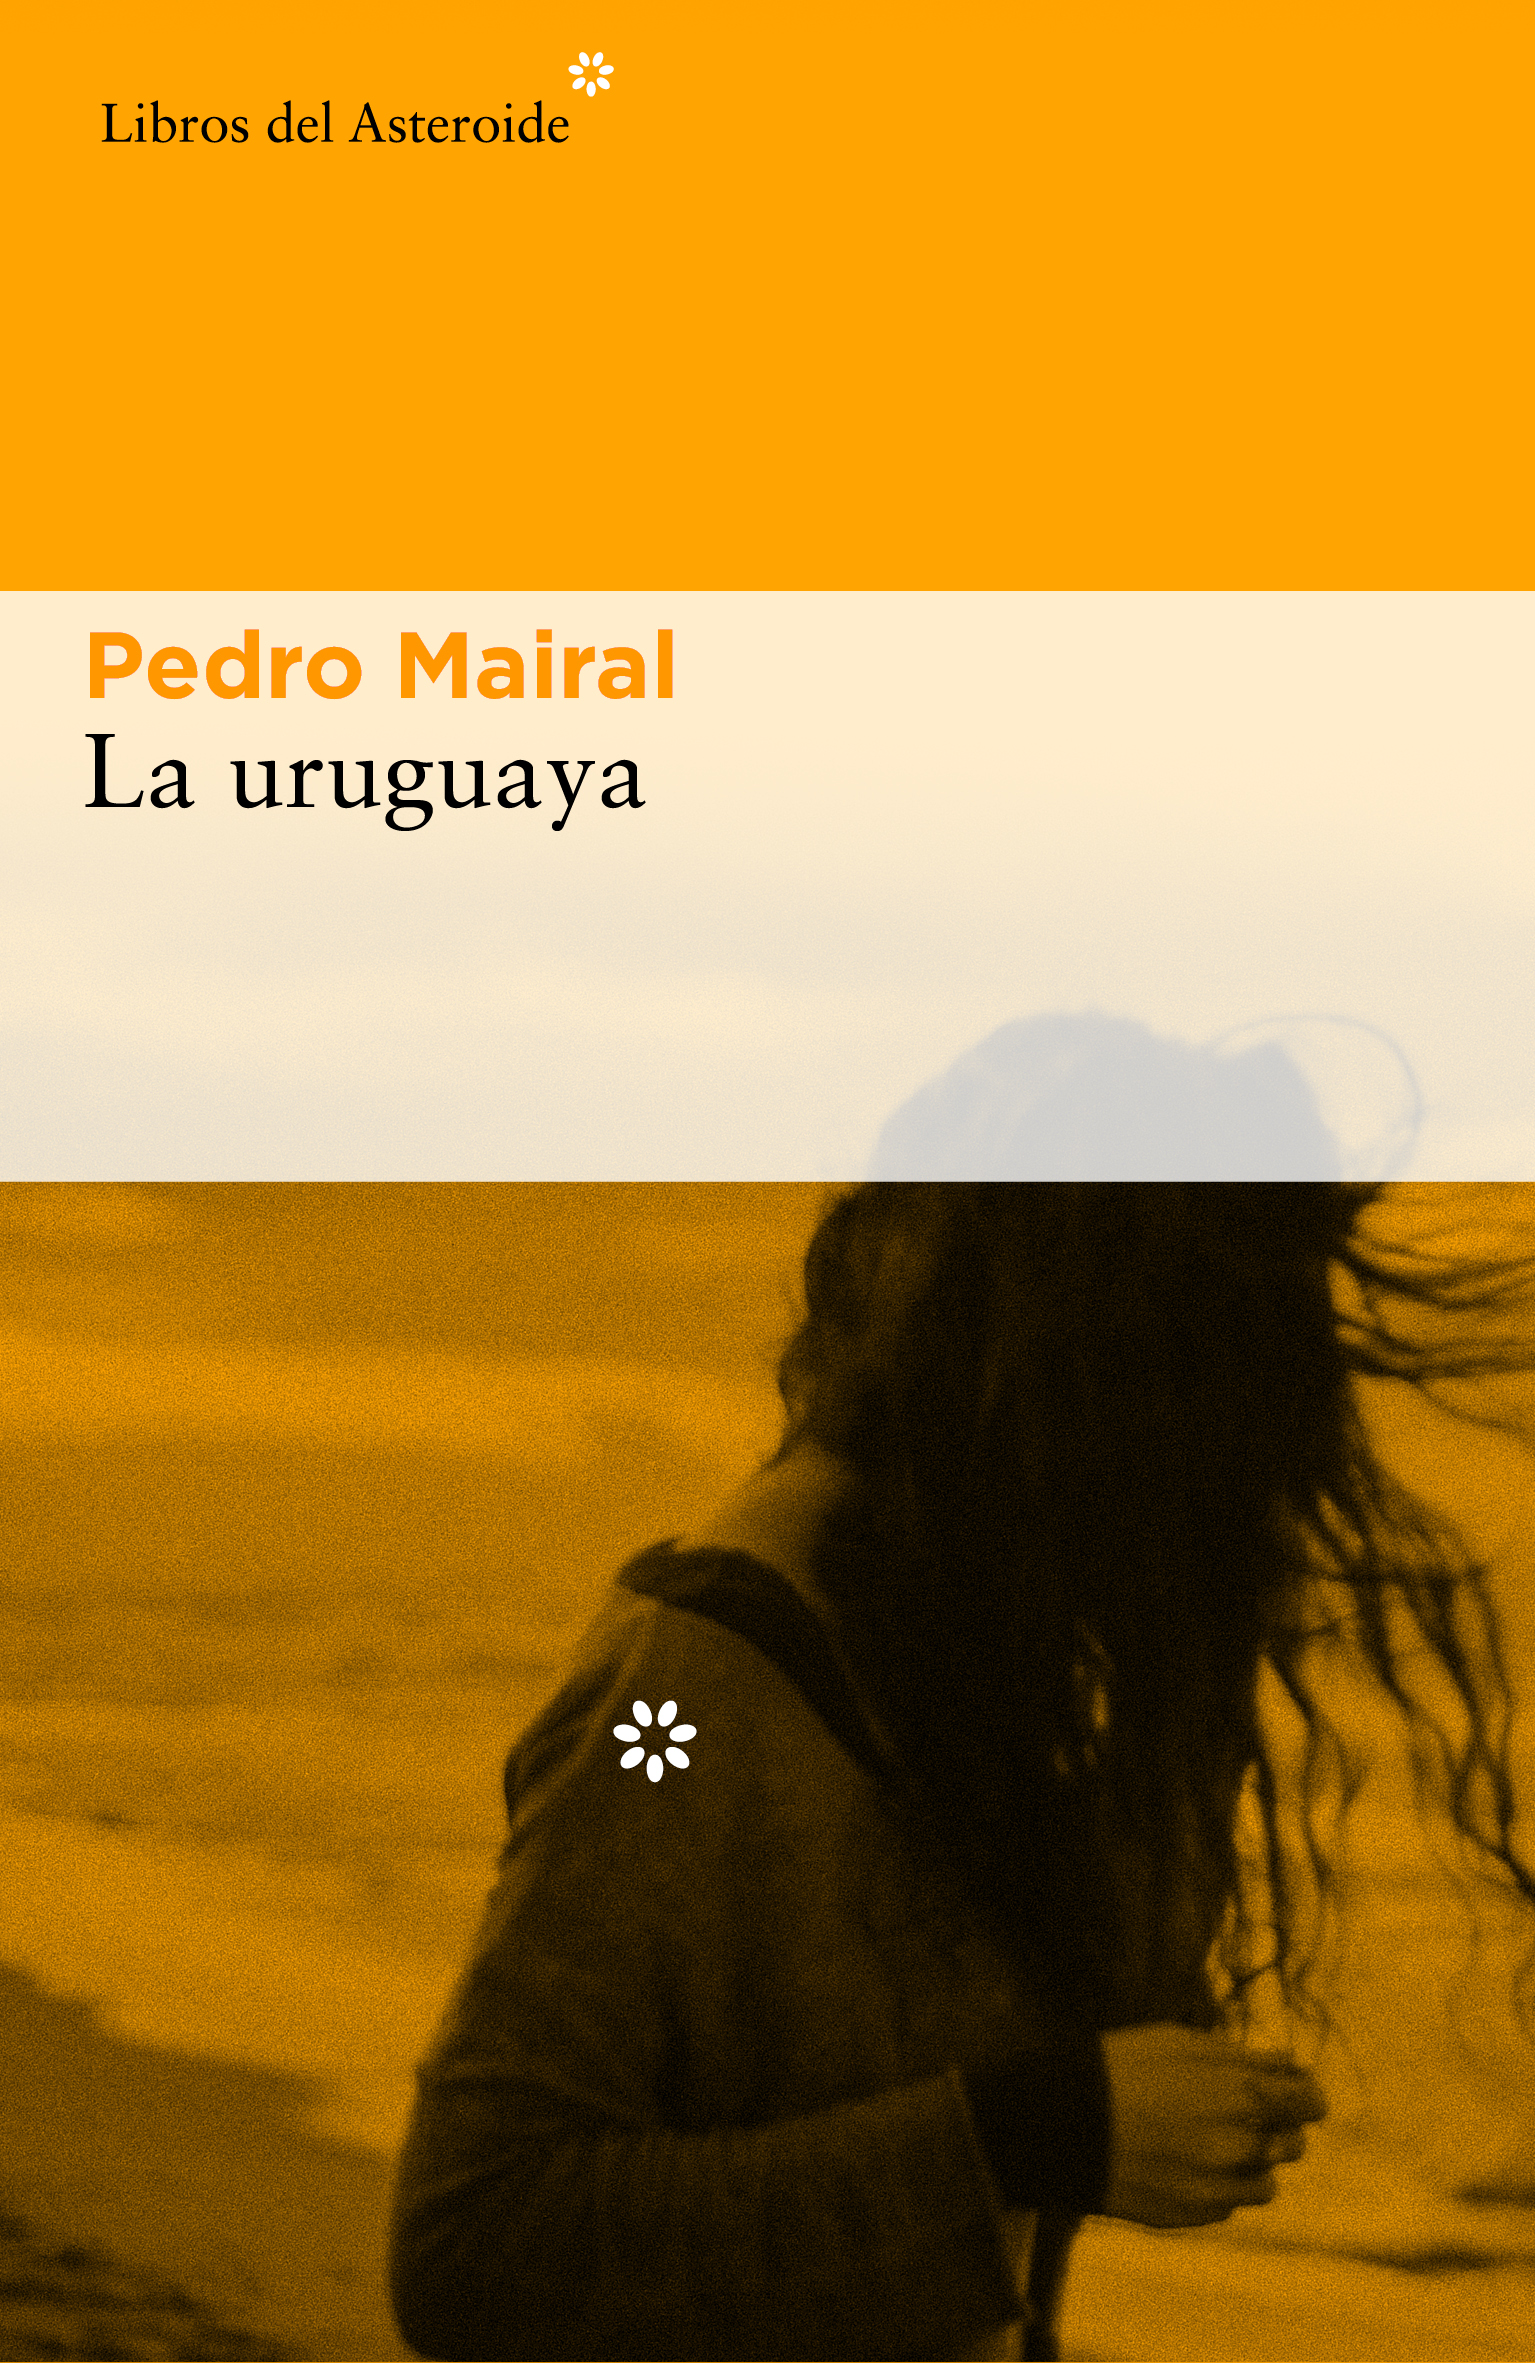 PEDRO MAIRAL. La uruguaya (Libros del Asteroide)